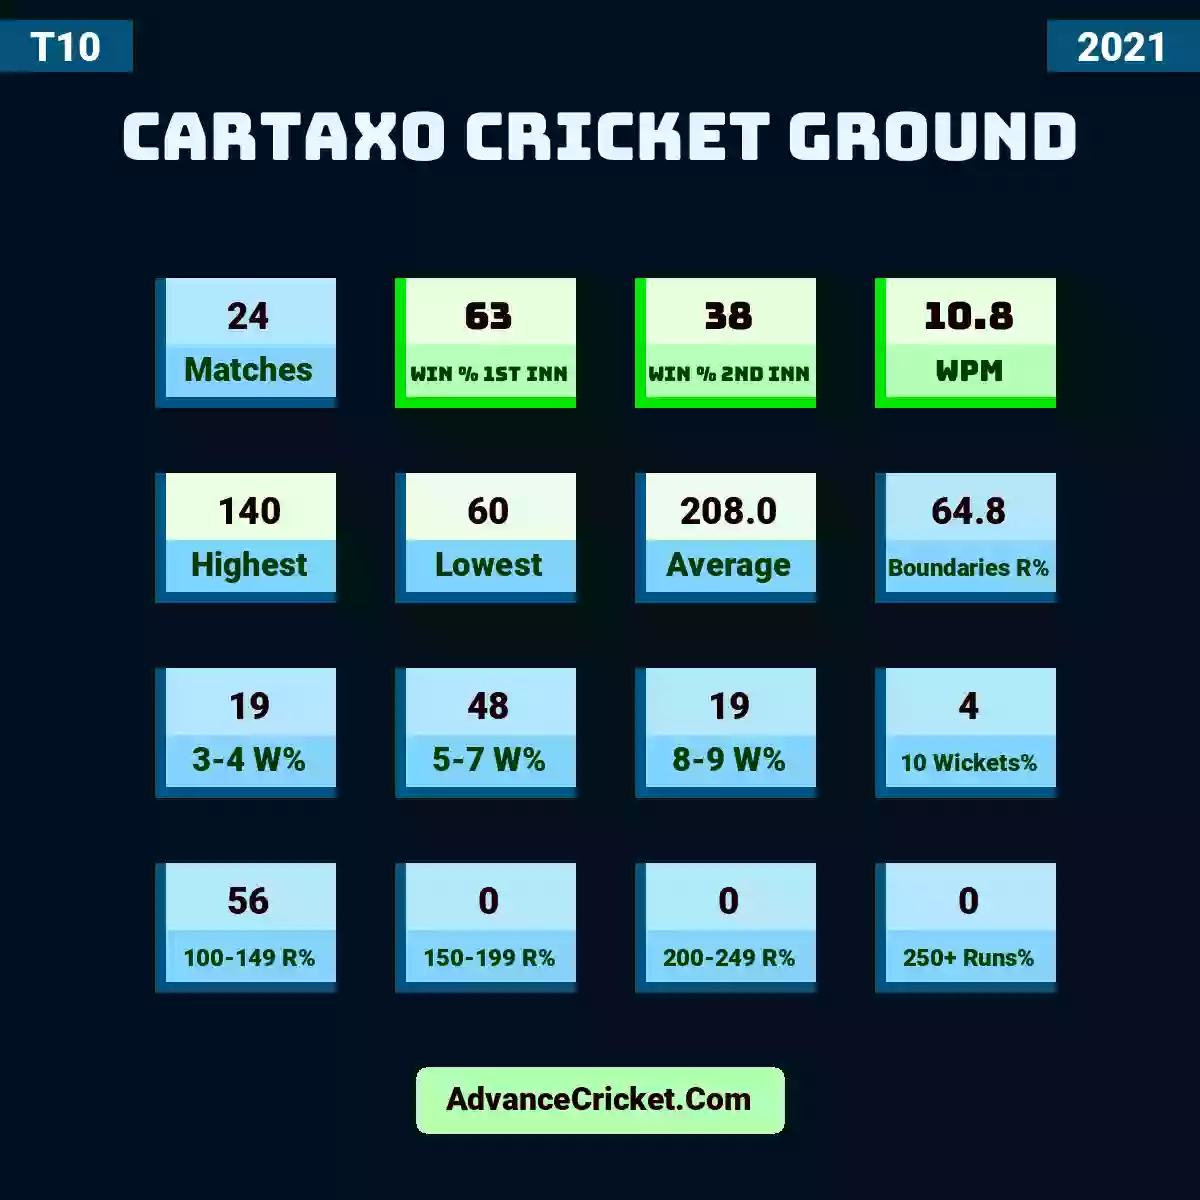 Image showing Cartaxo Cricket Ground with Matches: 24, Win % 1st Inn: 63, Win % 2nd Inn: 38, WPM: 10.8, Highest: 140, Lowest: 60, Average: 208.0, Boundaries R%: 64.8, 3-4 W%: 19, 5-7 W%: 48, 8-9 W%: 19, 10 Wickets%: 4, 100-149 R%: 56, 150-199 R%: 0, 200-249 R%: 0, 250+ Runs%: 0.